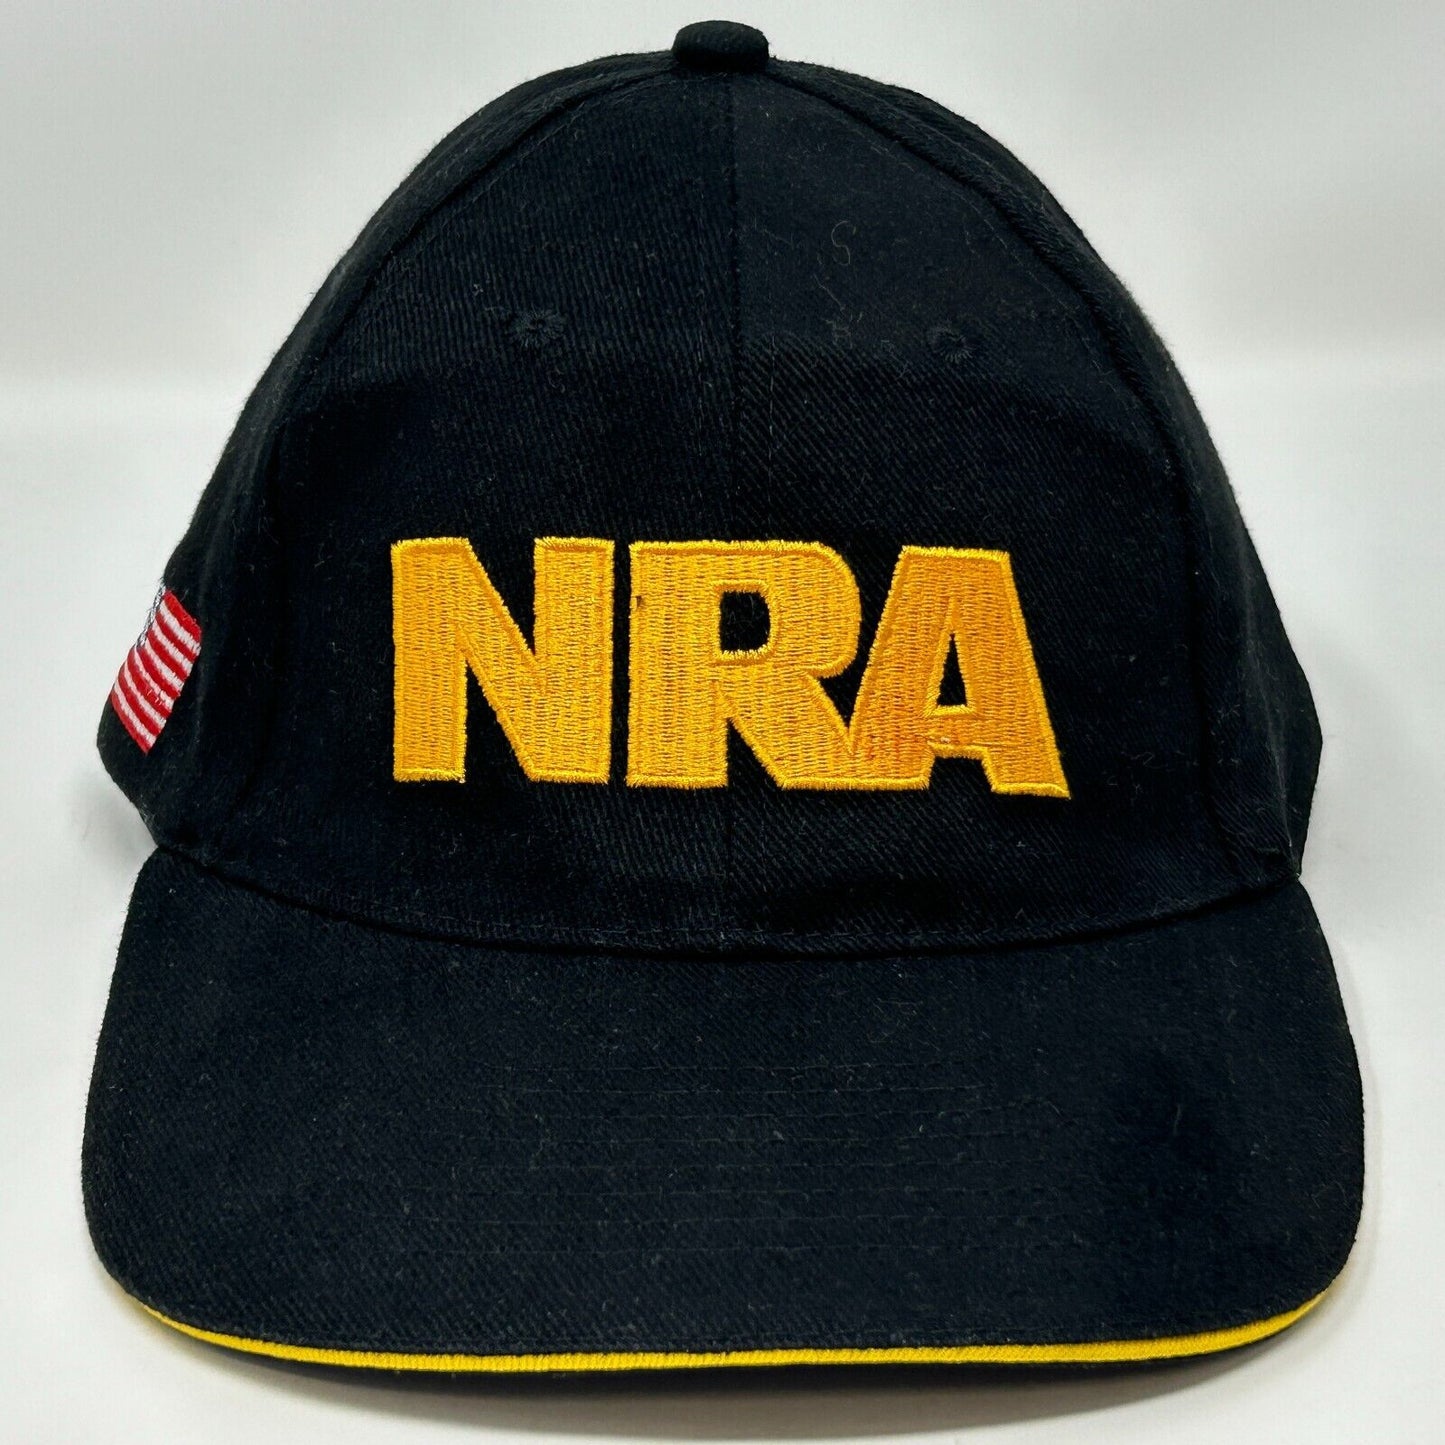 NRA National Rifle Association Strapback Hat Guns Firearms 6 Panel Baseball Cap